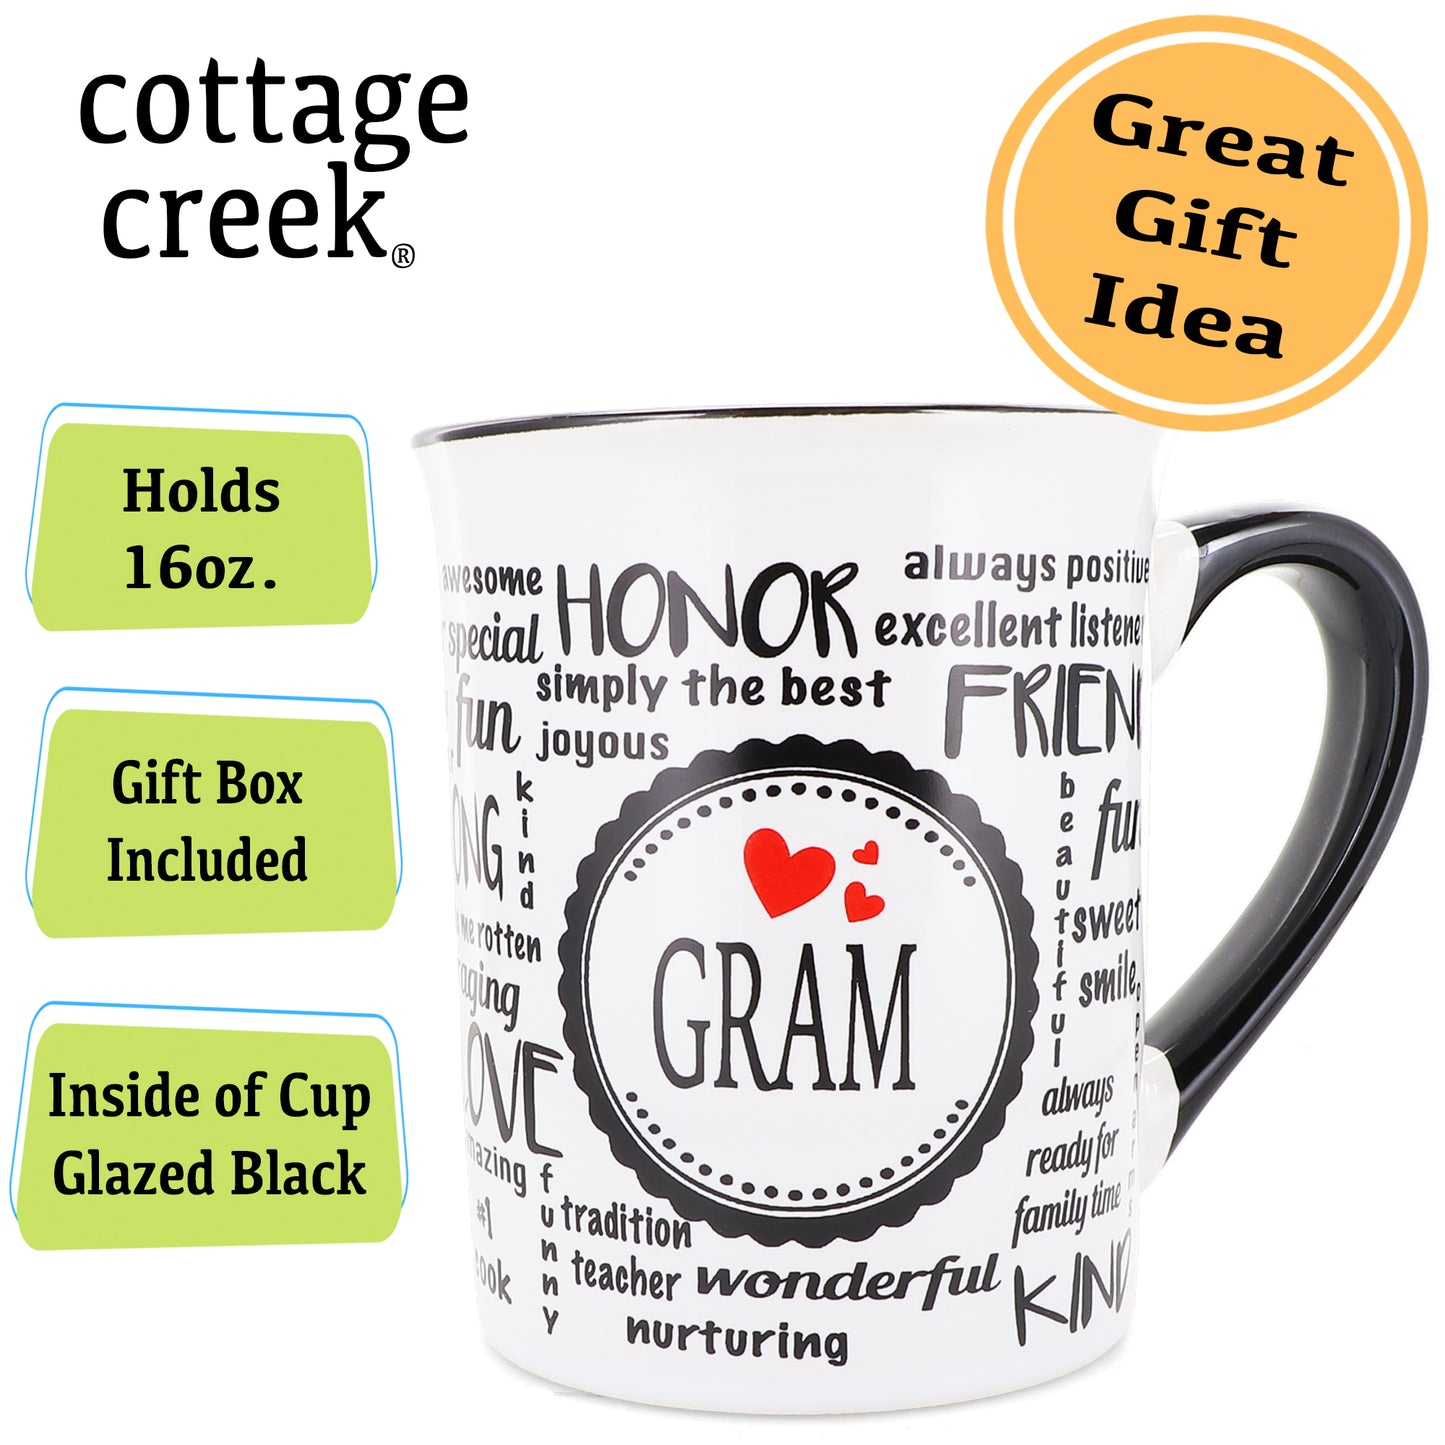 Cottage Creek Gram Mug, Gram Coffee Mug, Ceramic, 16oz., 6" Multicolored